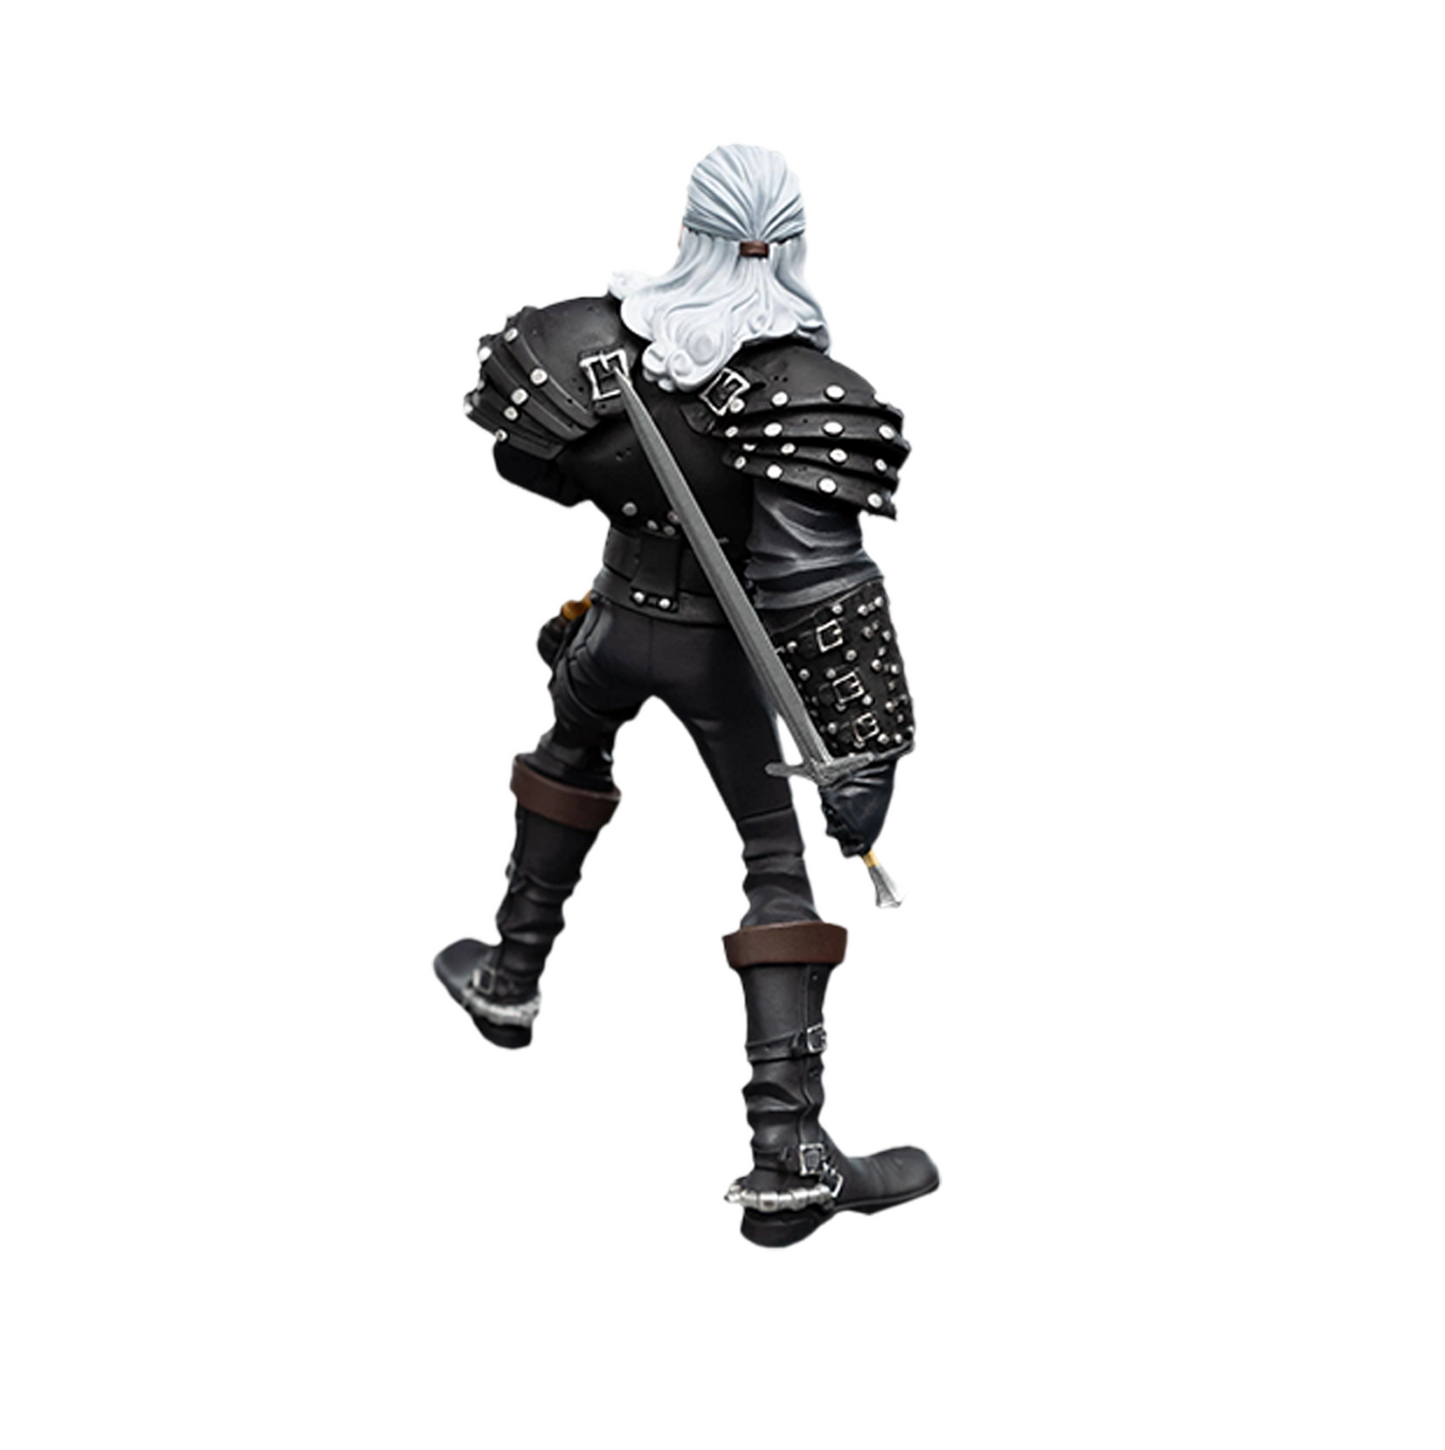 Weta Mini Epic figure of Geralt of Rivia character back view